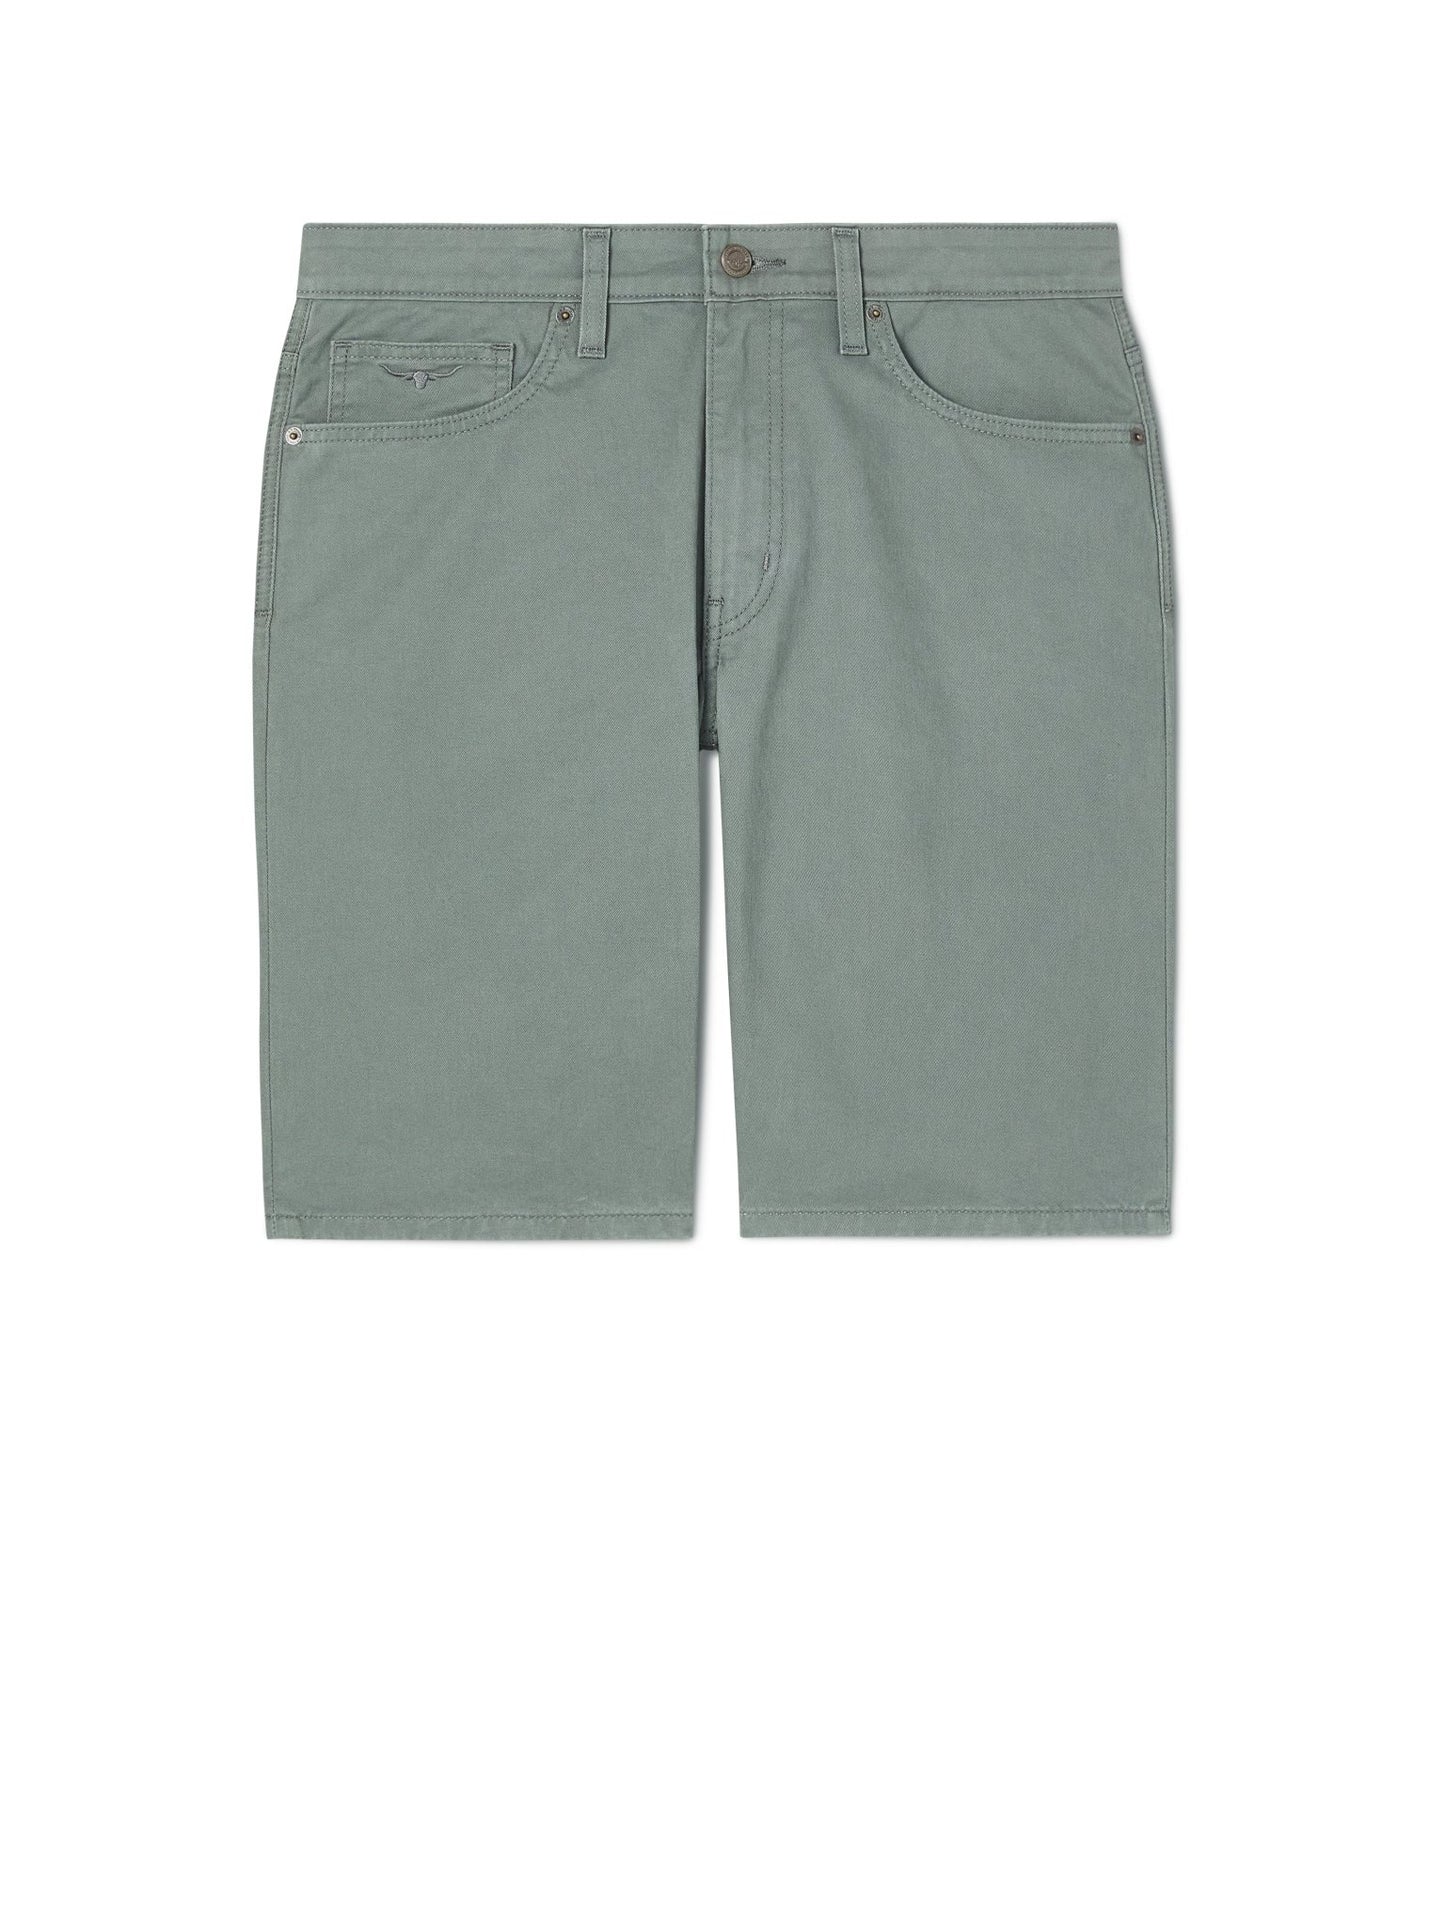 RMW S22 Nicholson Shorts - Thomson's Suits Ltd - Sage - 30 - 53159